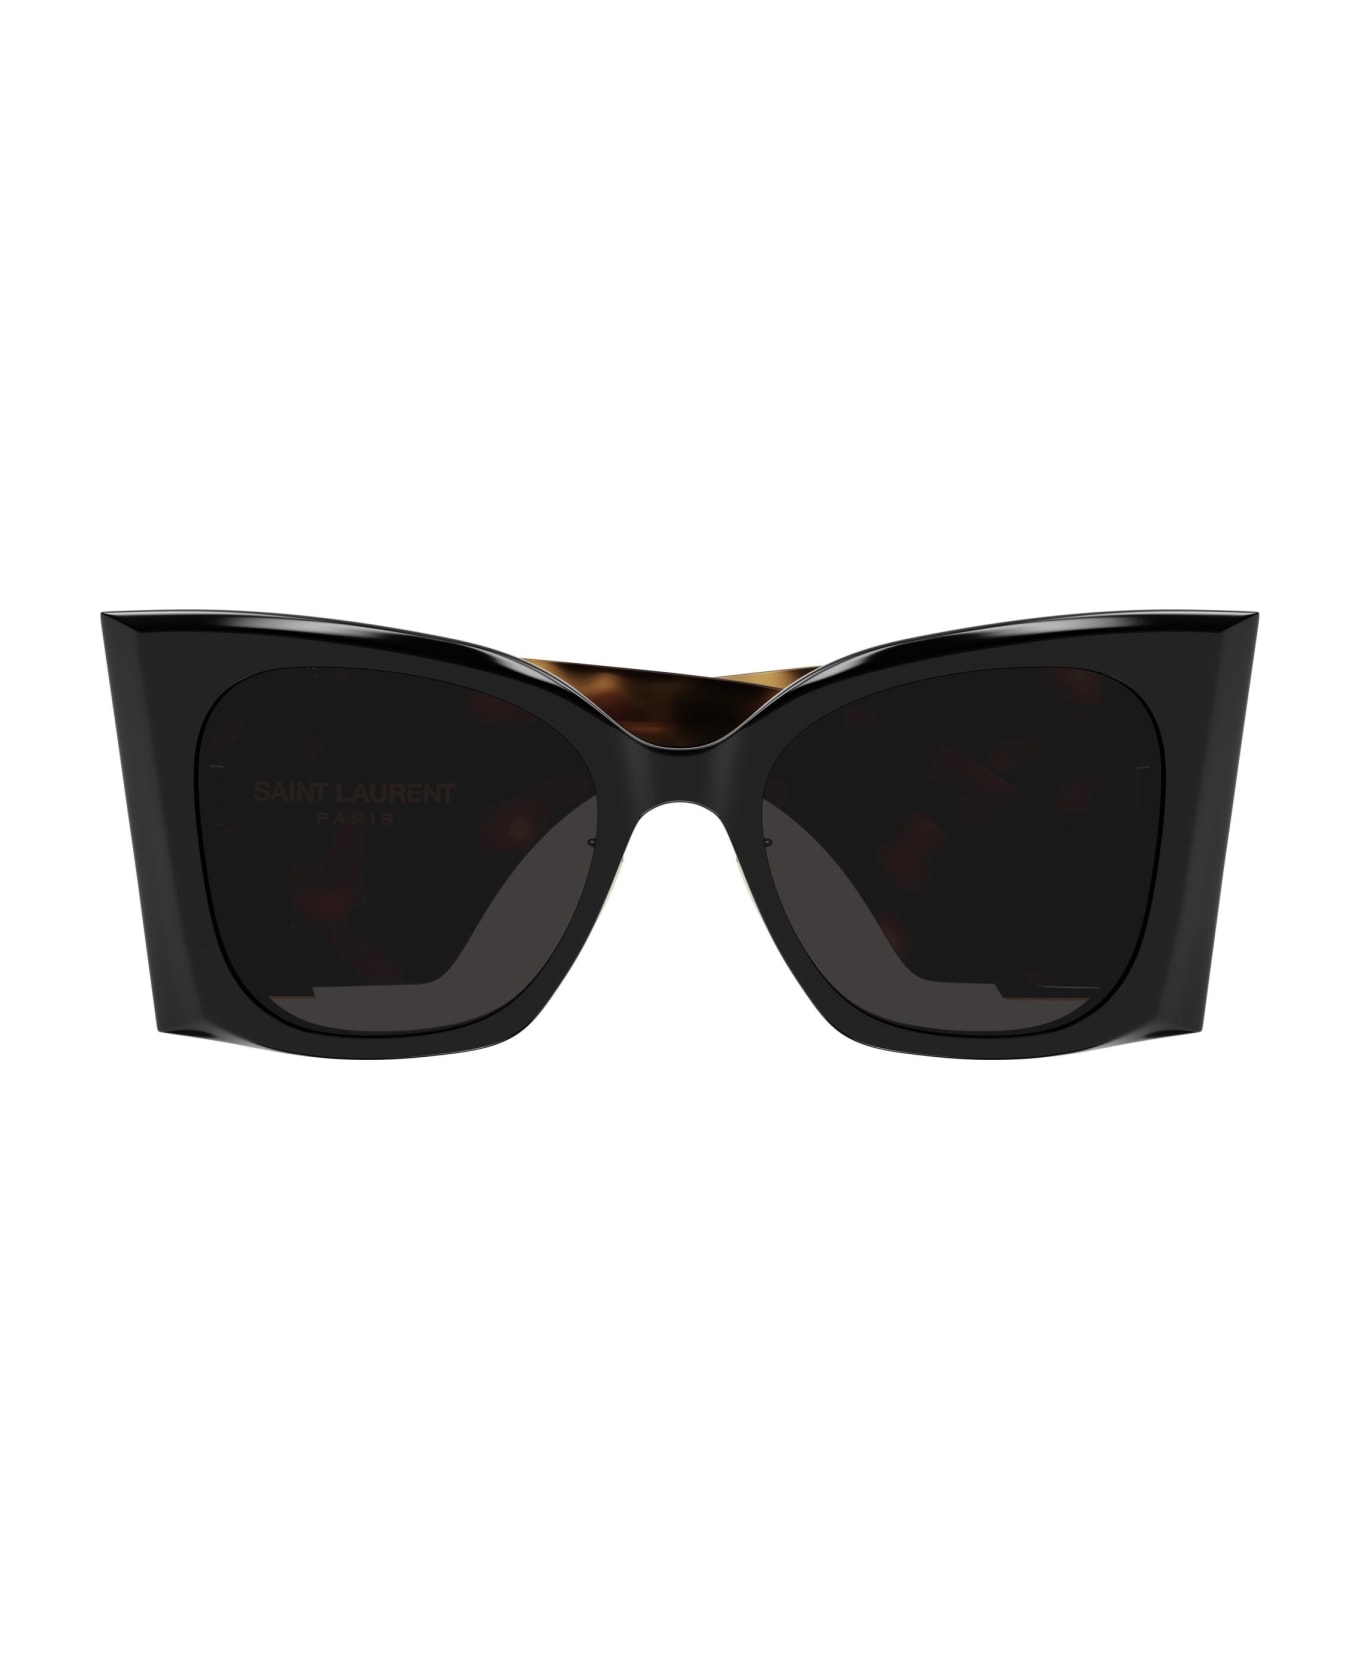 Saint Laurent Eyewear Sunglasses - Multicolor サングラス